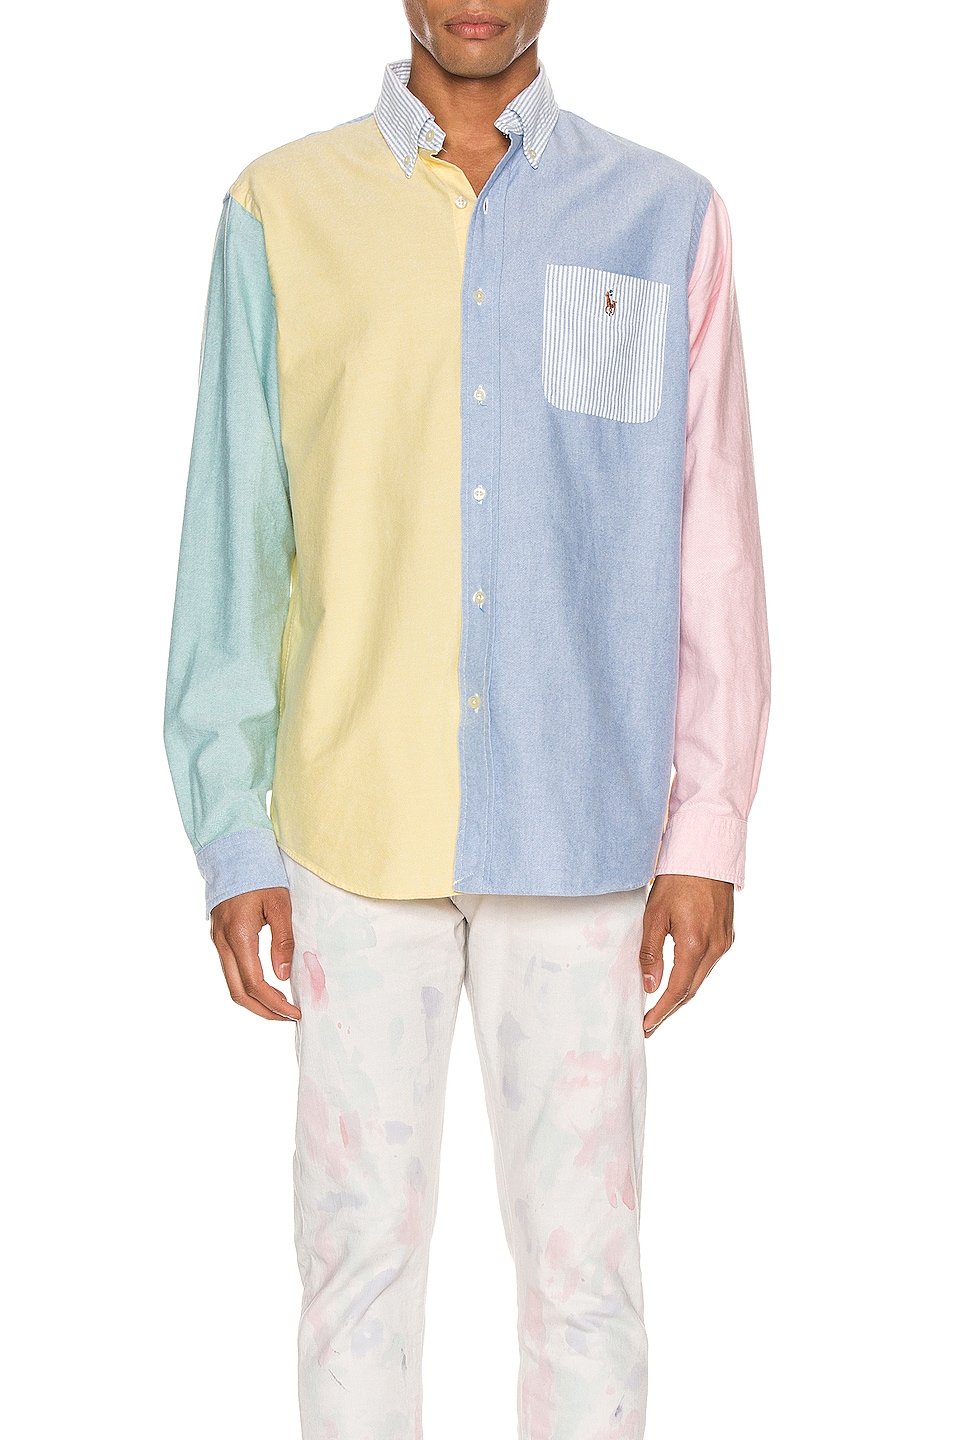 Image 1 of Polo Ralph Lauren Oxford Long Sleeve Shirt in 4680 Solid Fun Shirt